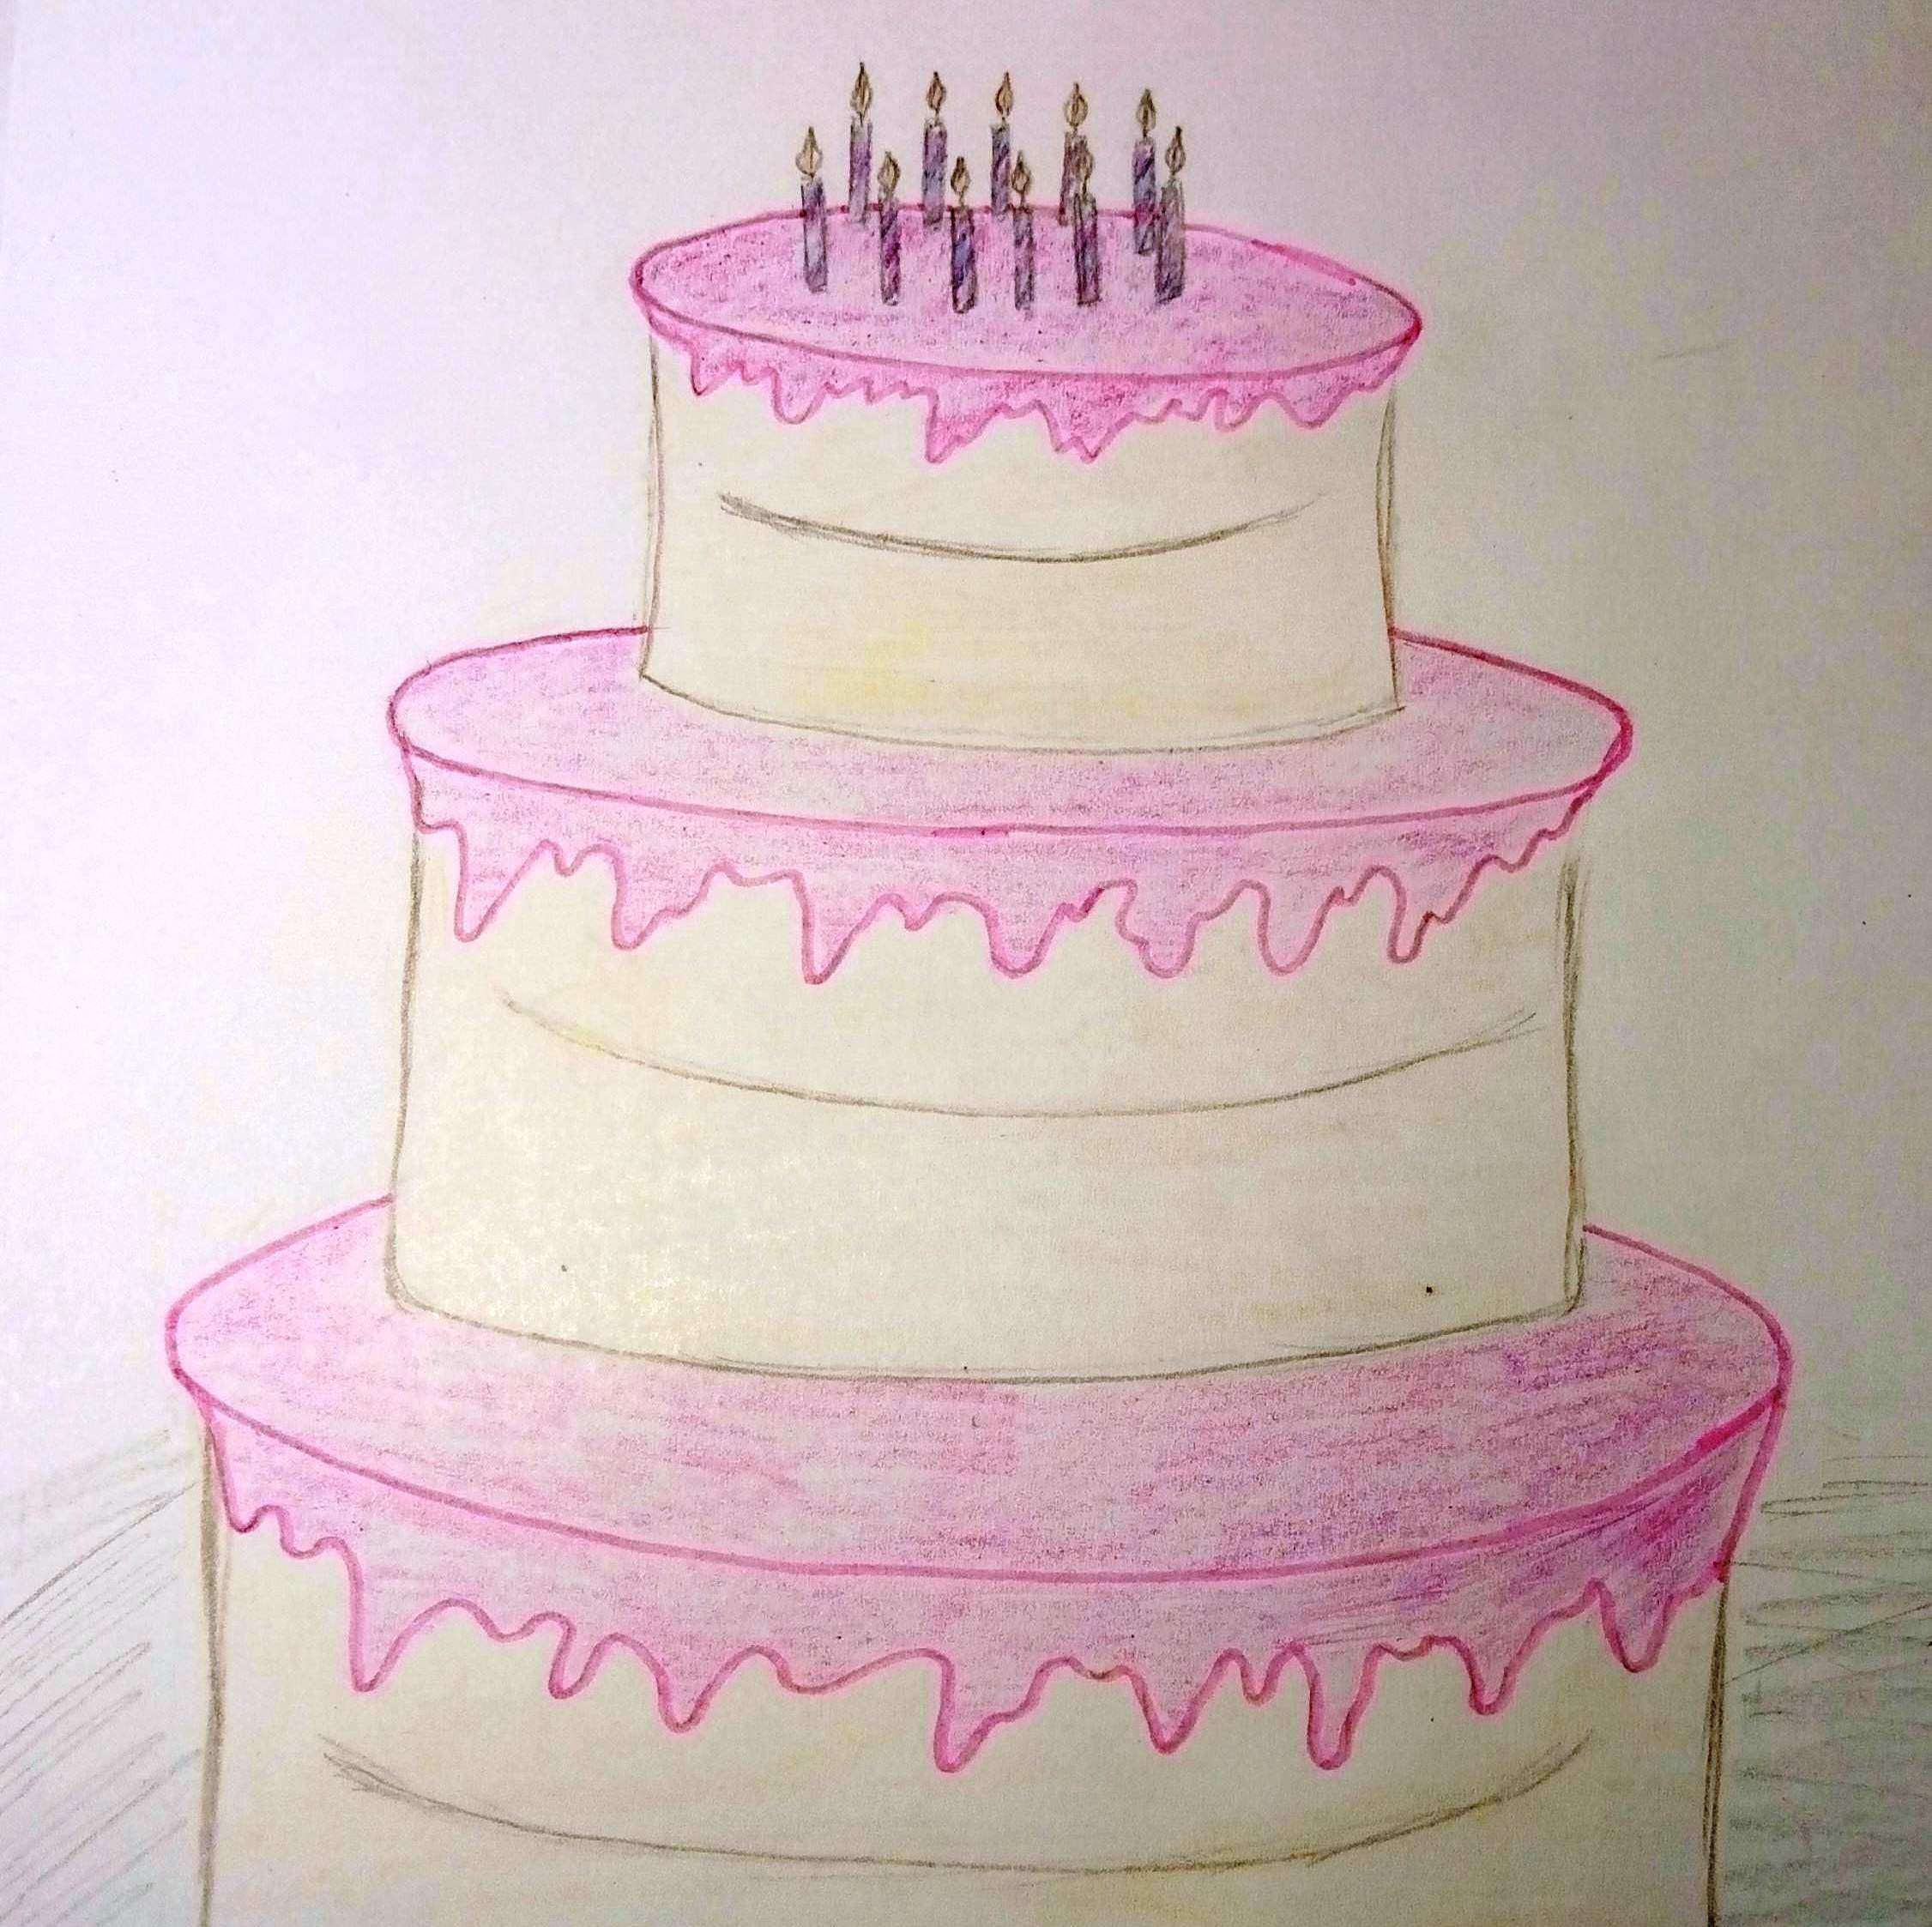 картинки для срисовки торт